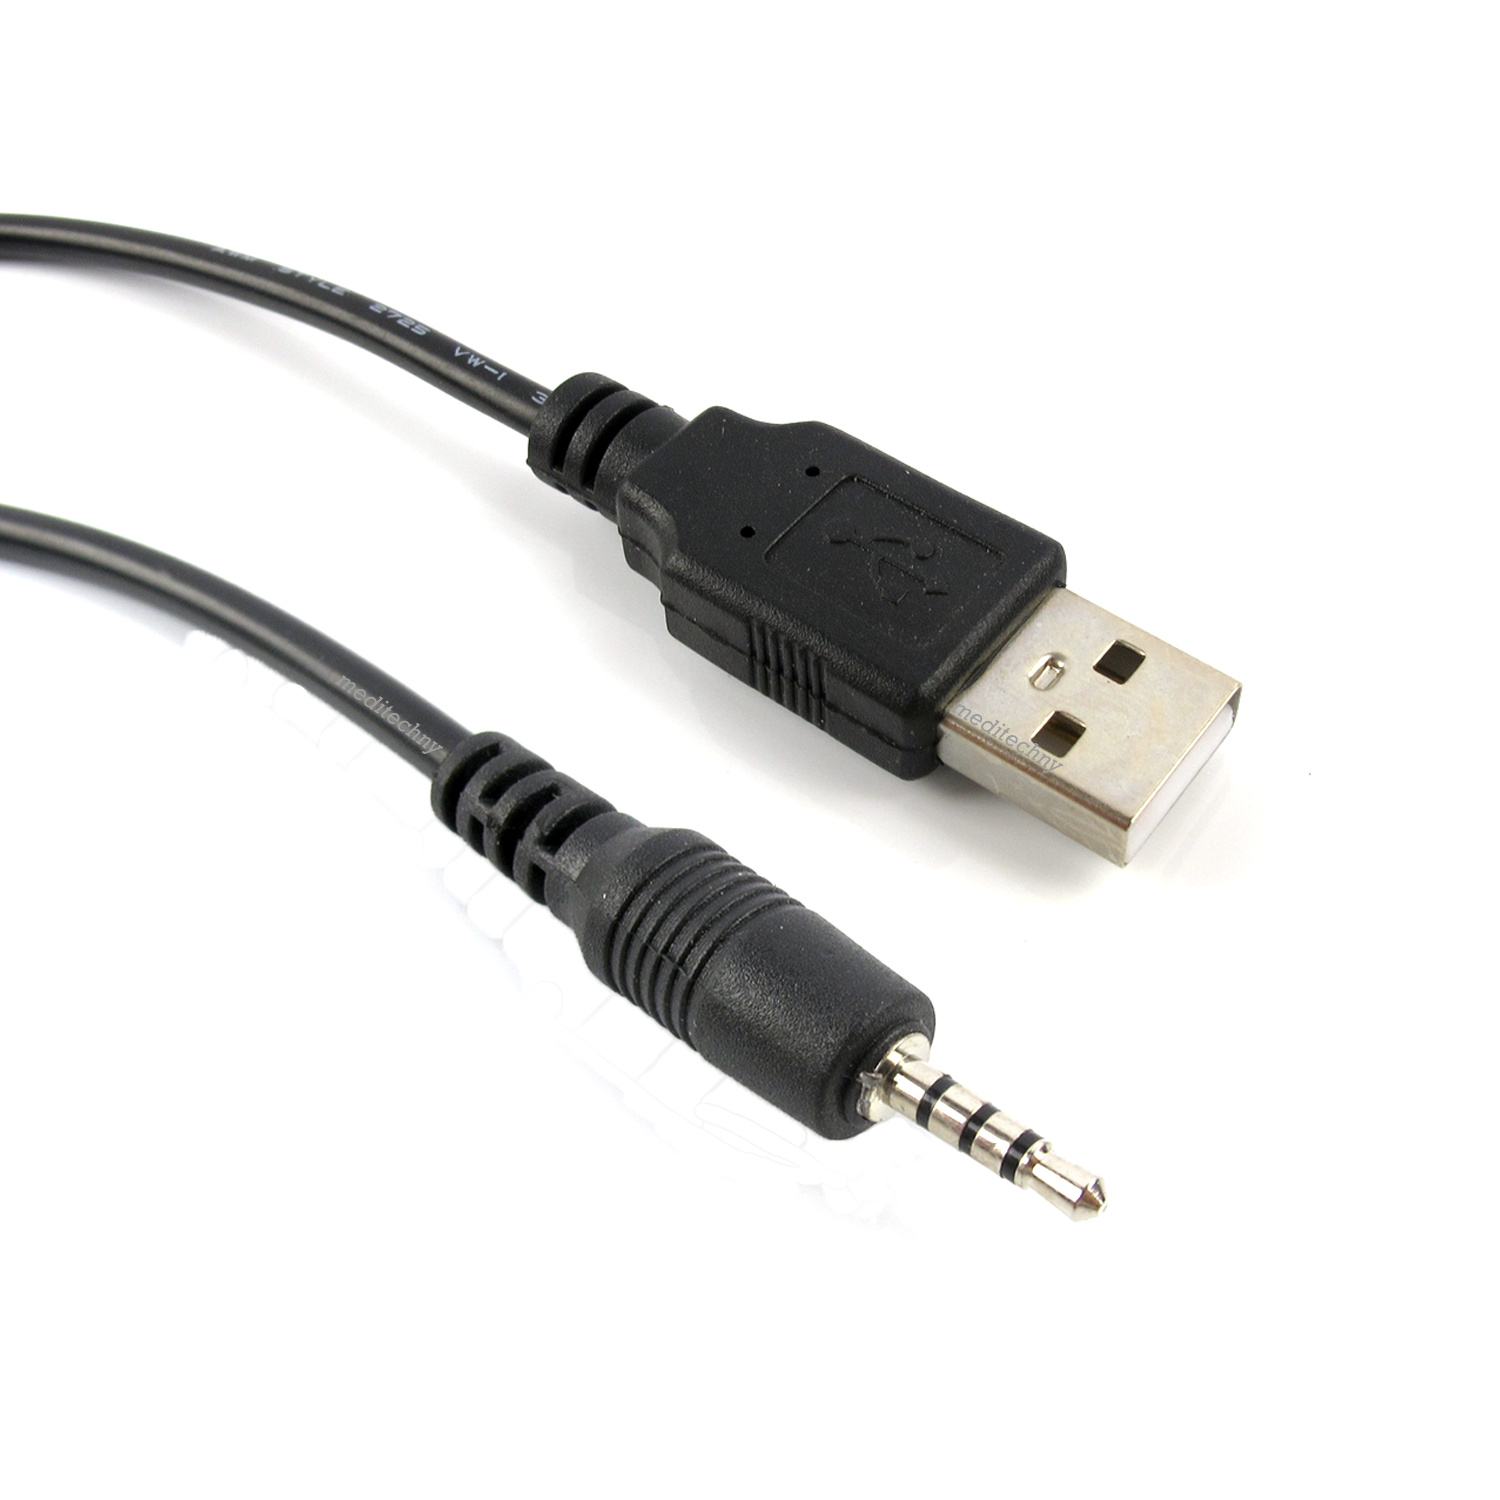 2 pcs USB 2.5mm Charging Charger Cable For JBL Synchros E40BT E50BT Headphones Unbranded/Generic E40BT E50BT